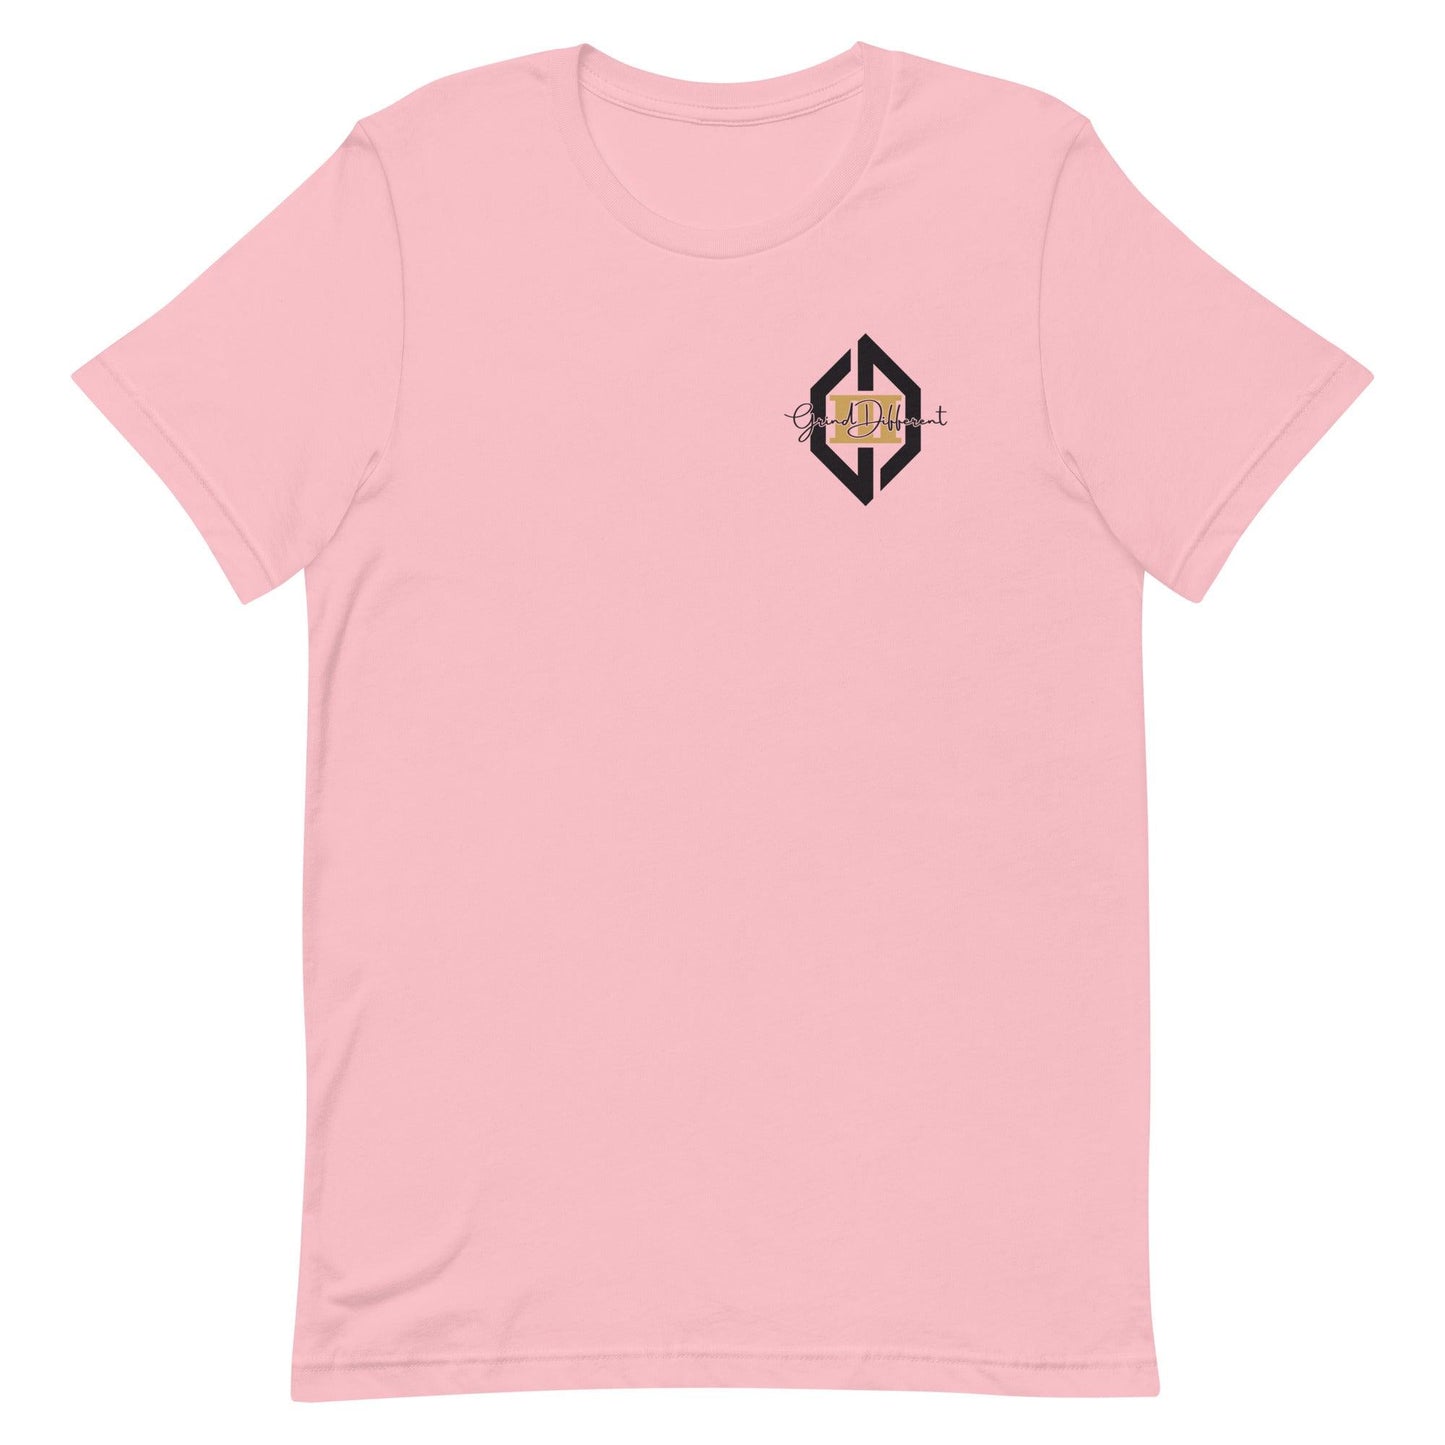 Claudale Davis III “Essential” t-shirt - Fan Arch